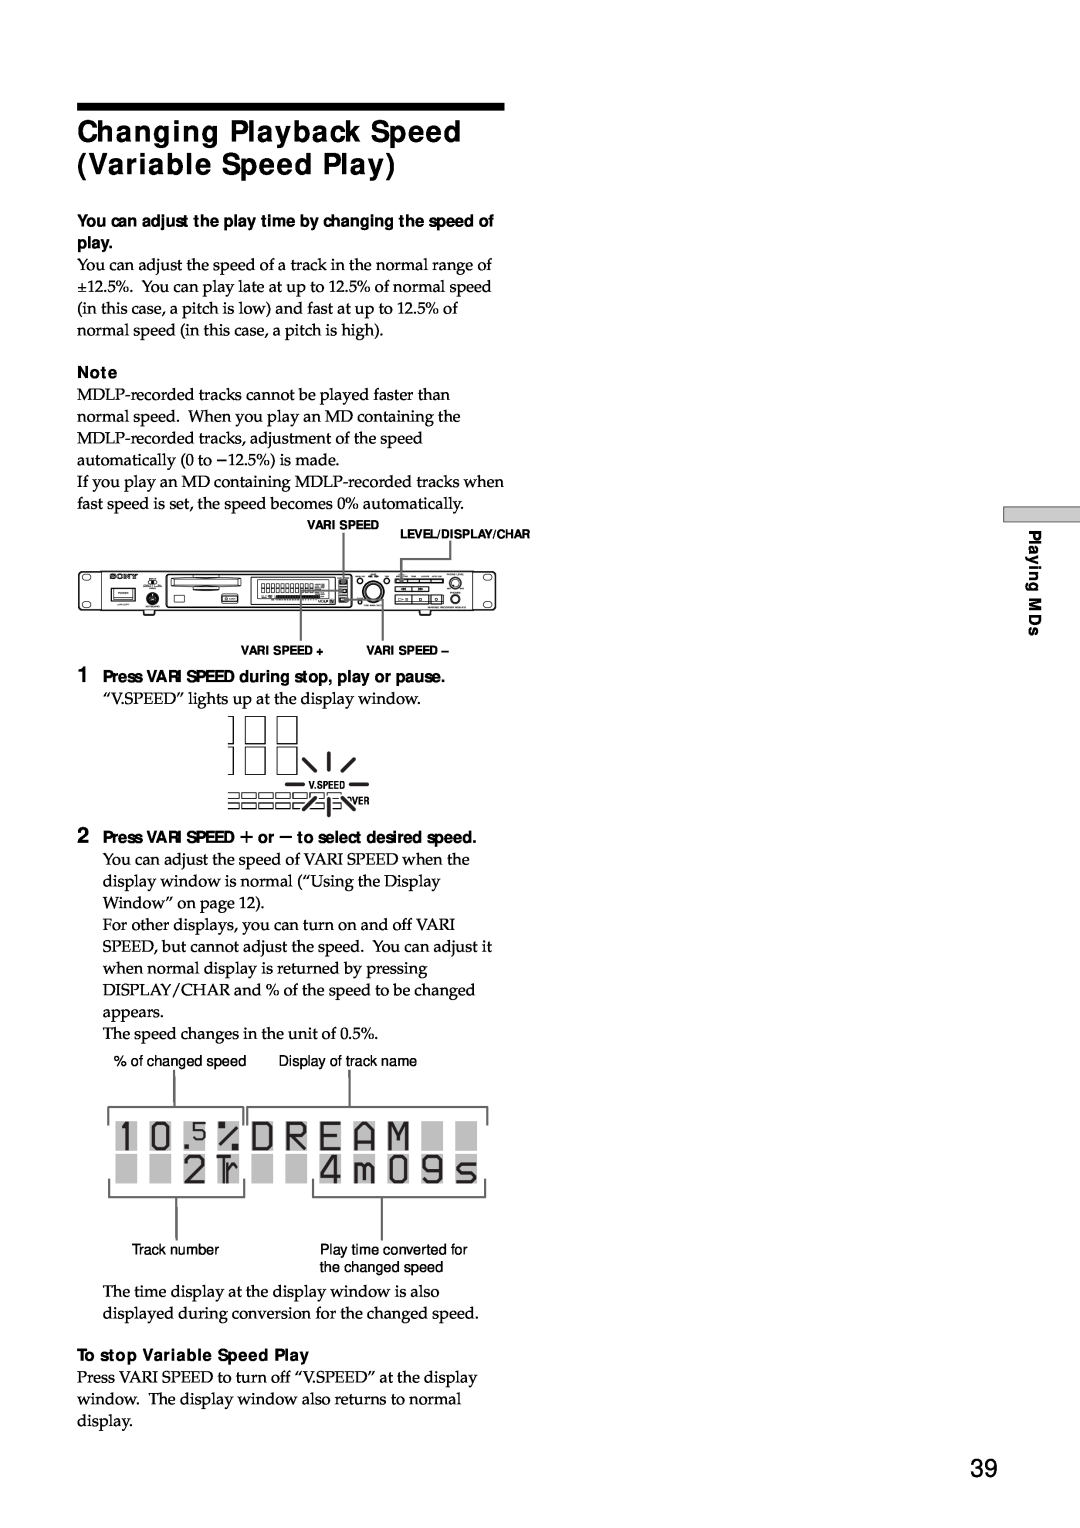 Sony MDS-E10 manual 1 0.5 % D R E A M 2 Tr 4 m 0 9 s, Changing Playback Speed Variable Speed Play 